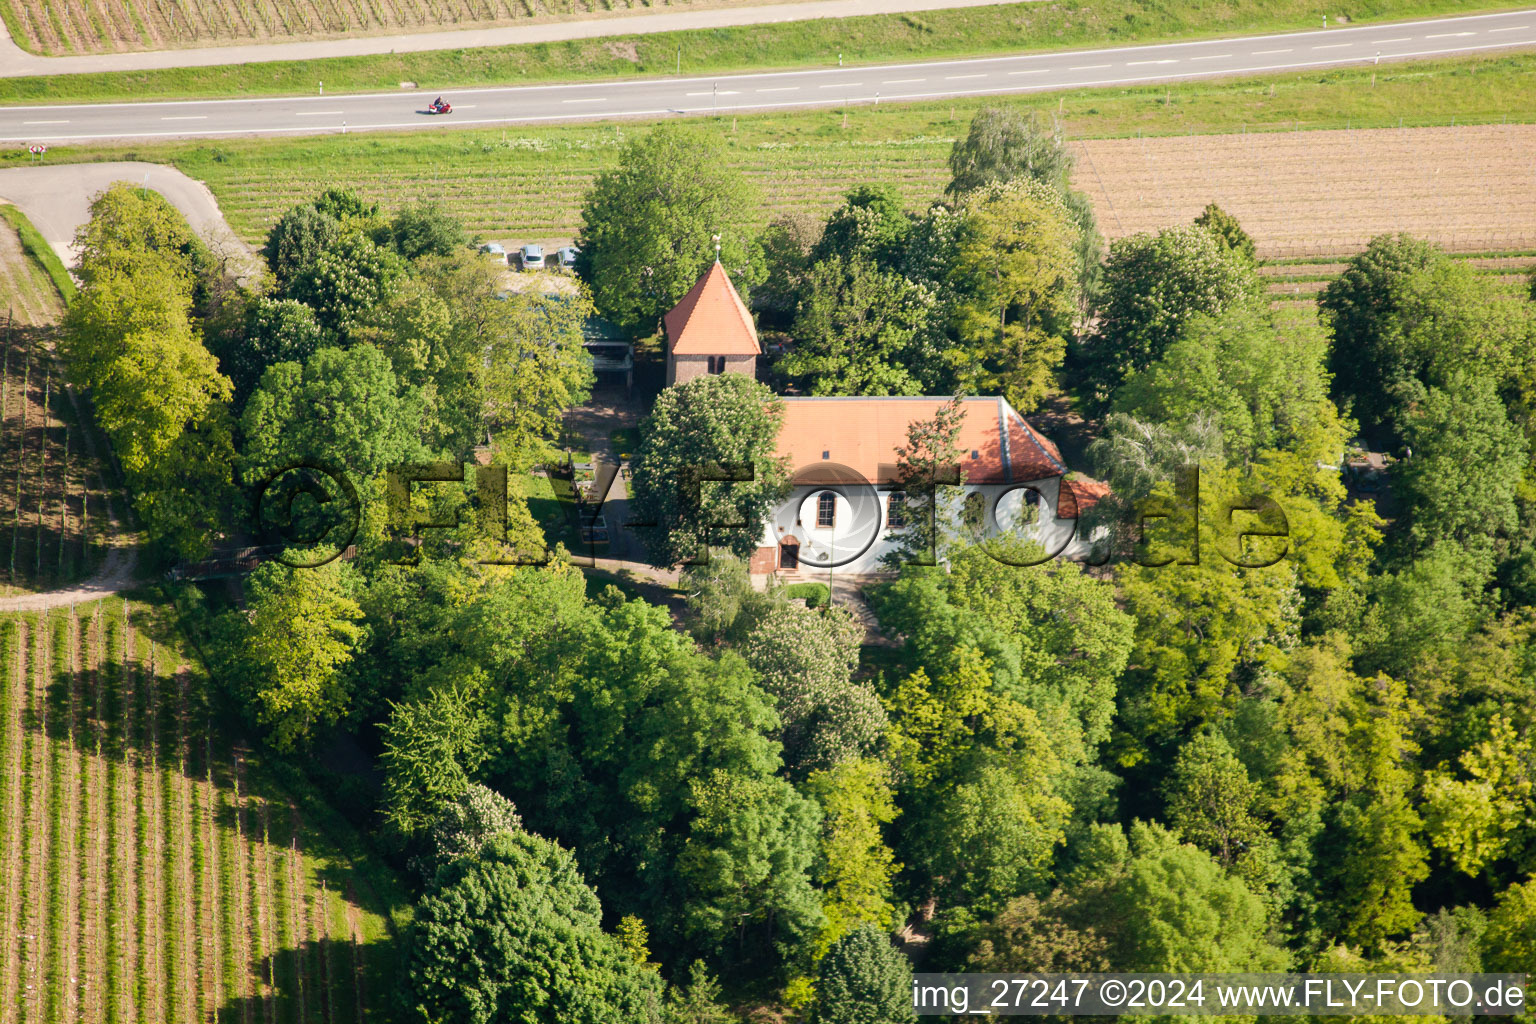 District Wollmesheim in Landau in der Pfalz in the state Rhineland-Palatinate, Germany from the plane